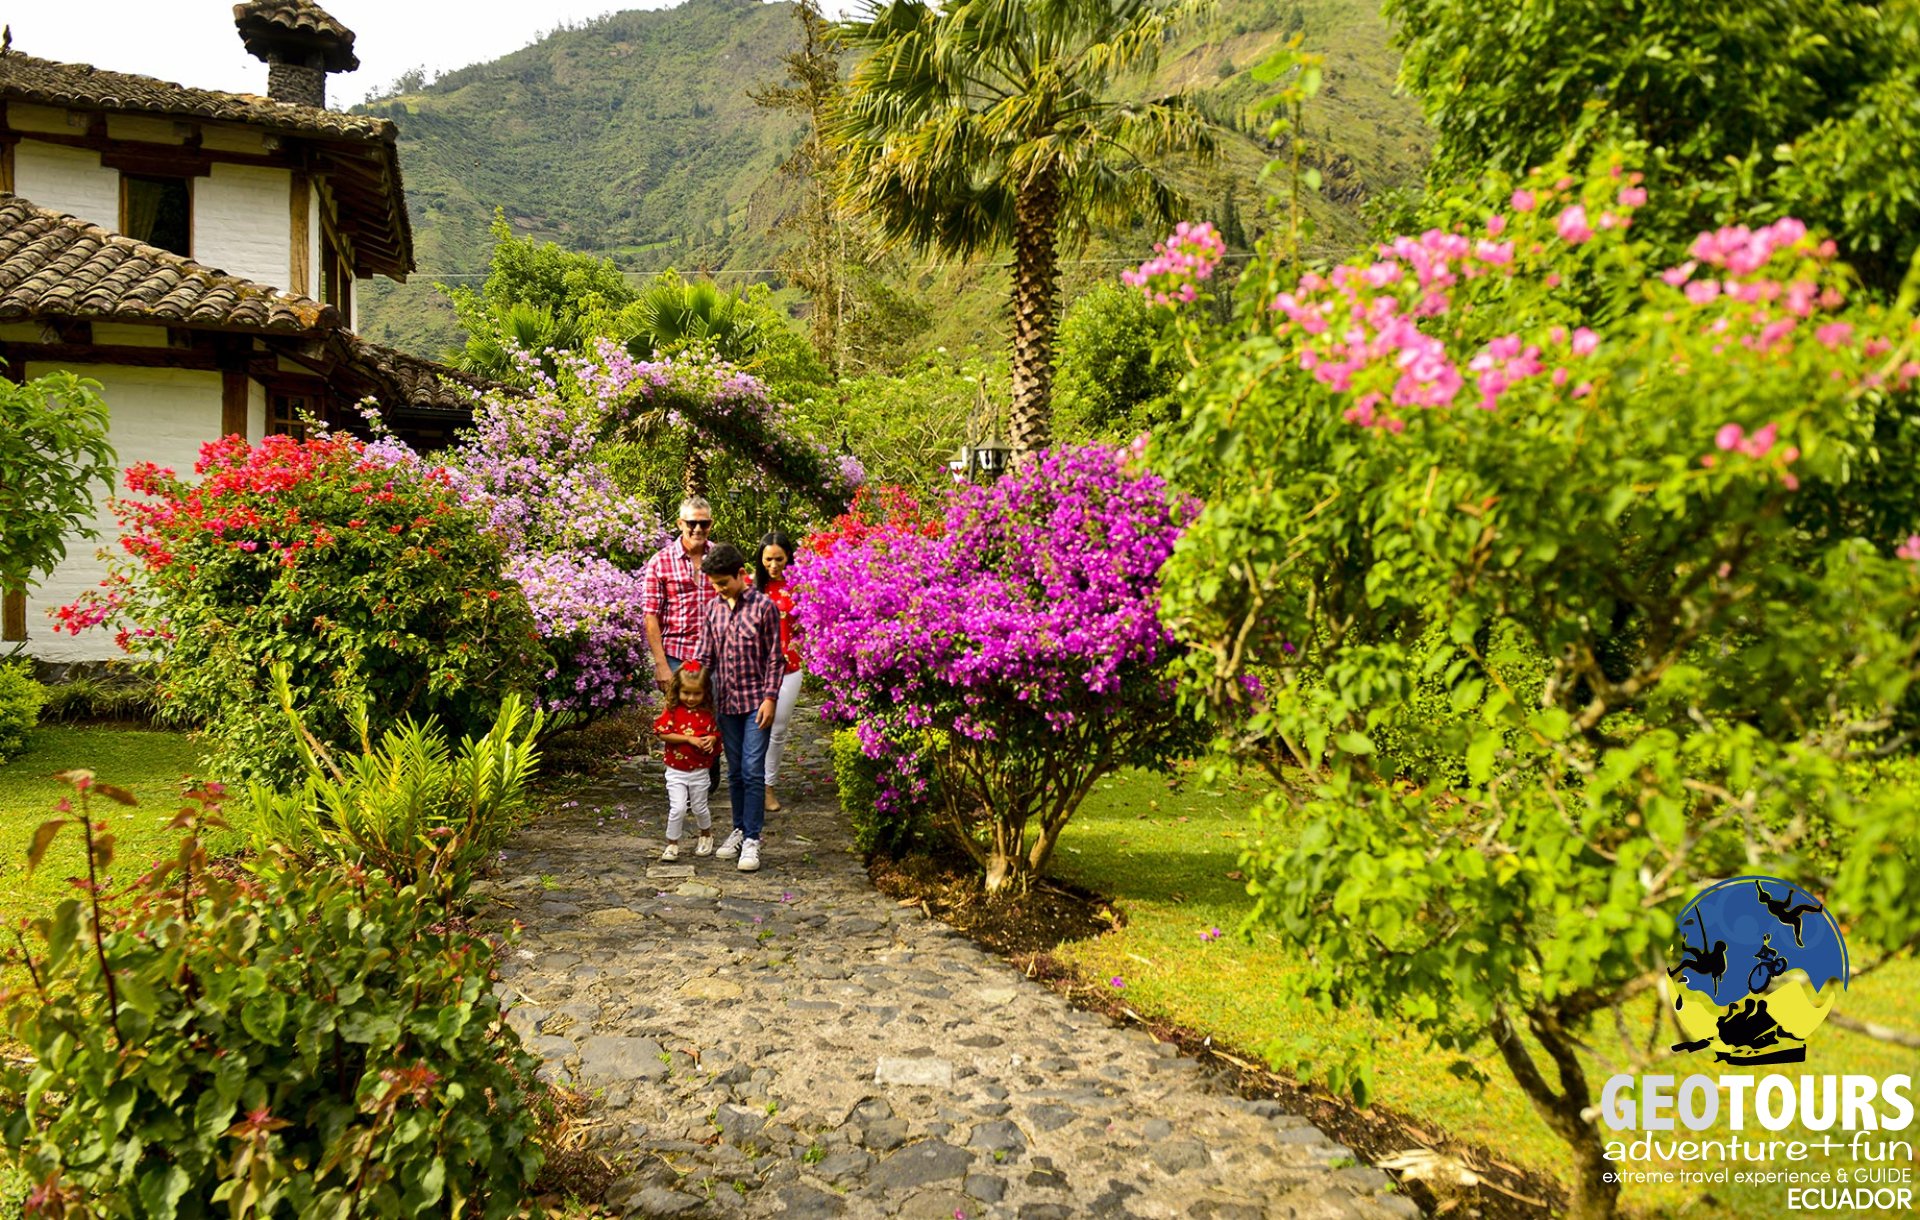 What type of flora can we find in Baños de Agua Santa?